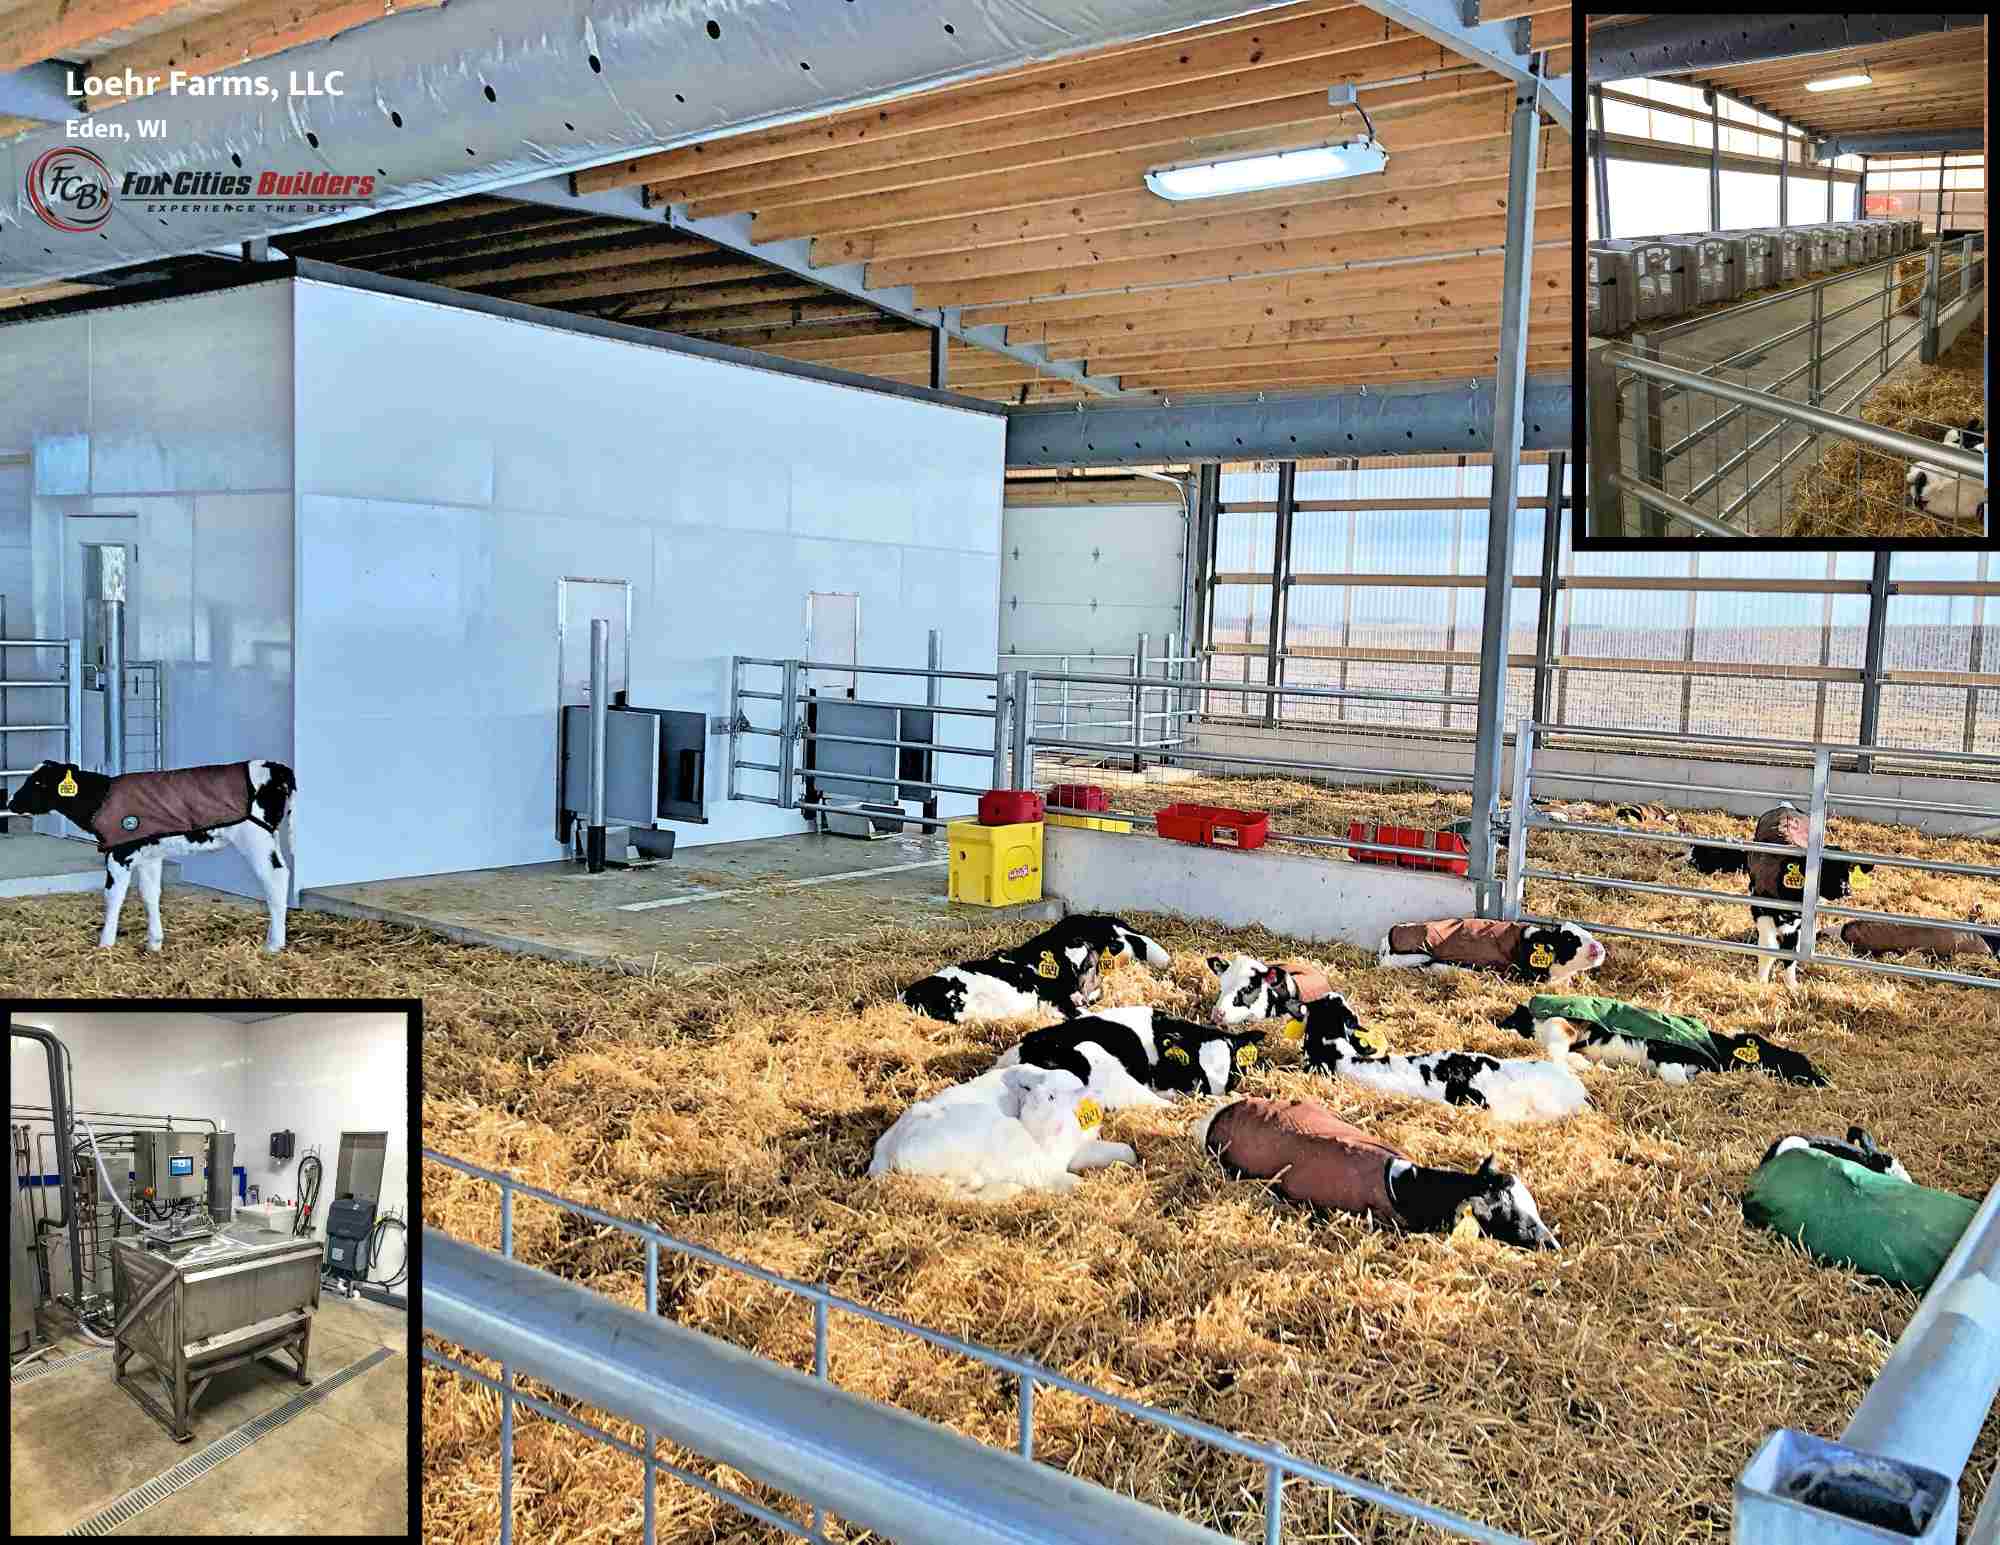 Loehr Farms - Robotic Calf Barn